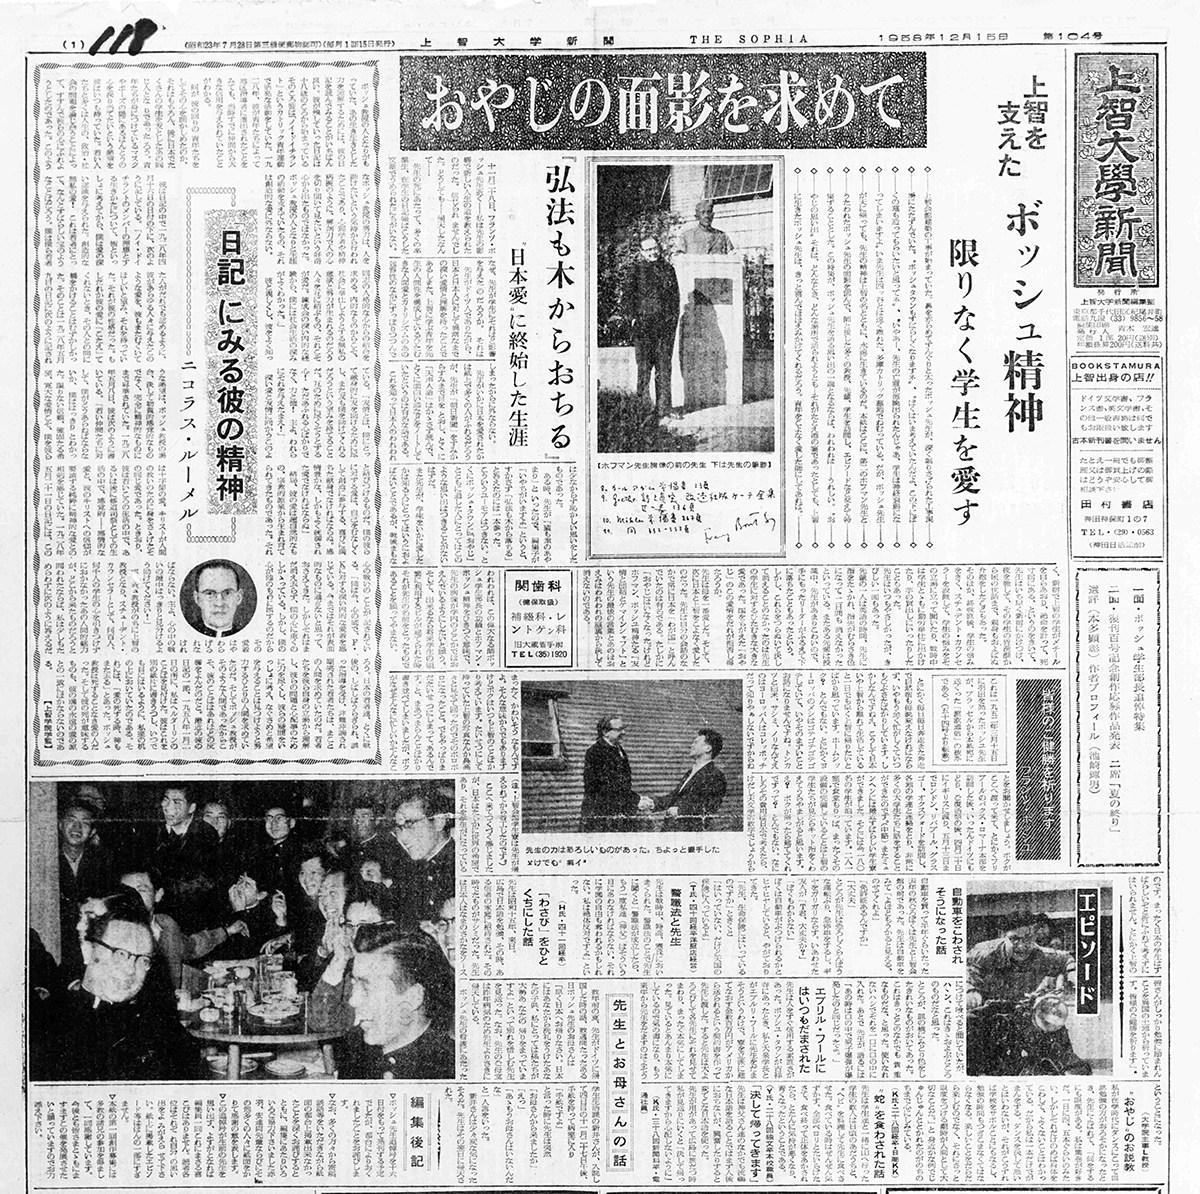 December 15, 1958 issue of Jōchi Daigaku Shimbun (The Sophia Times), the student newspaper